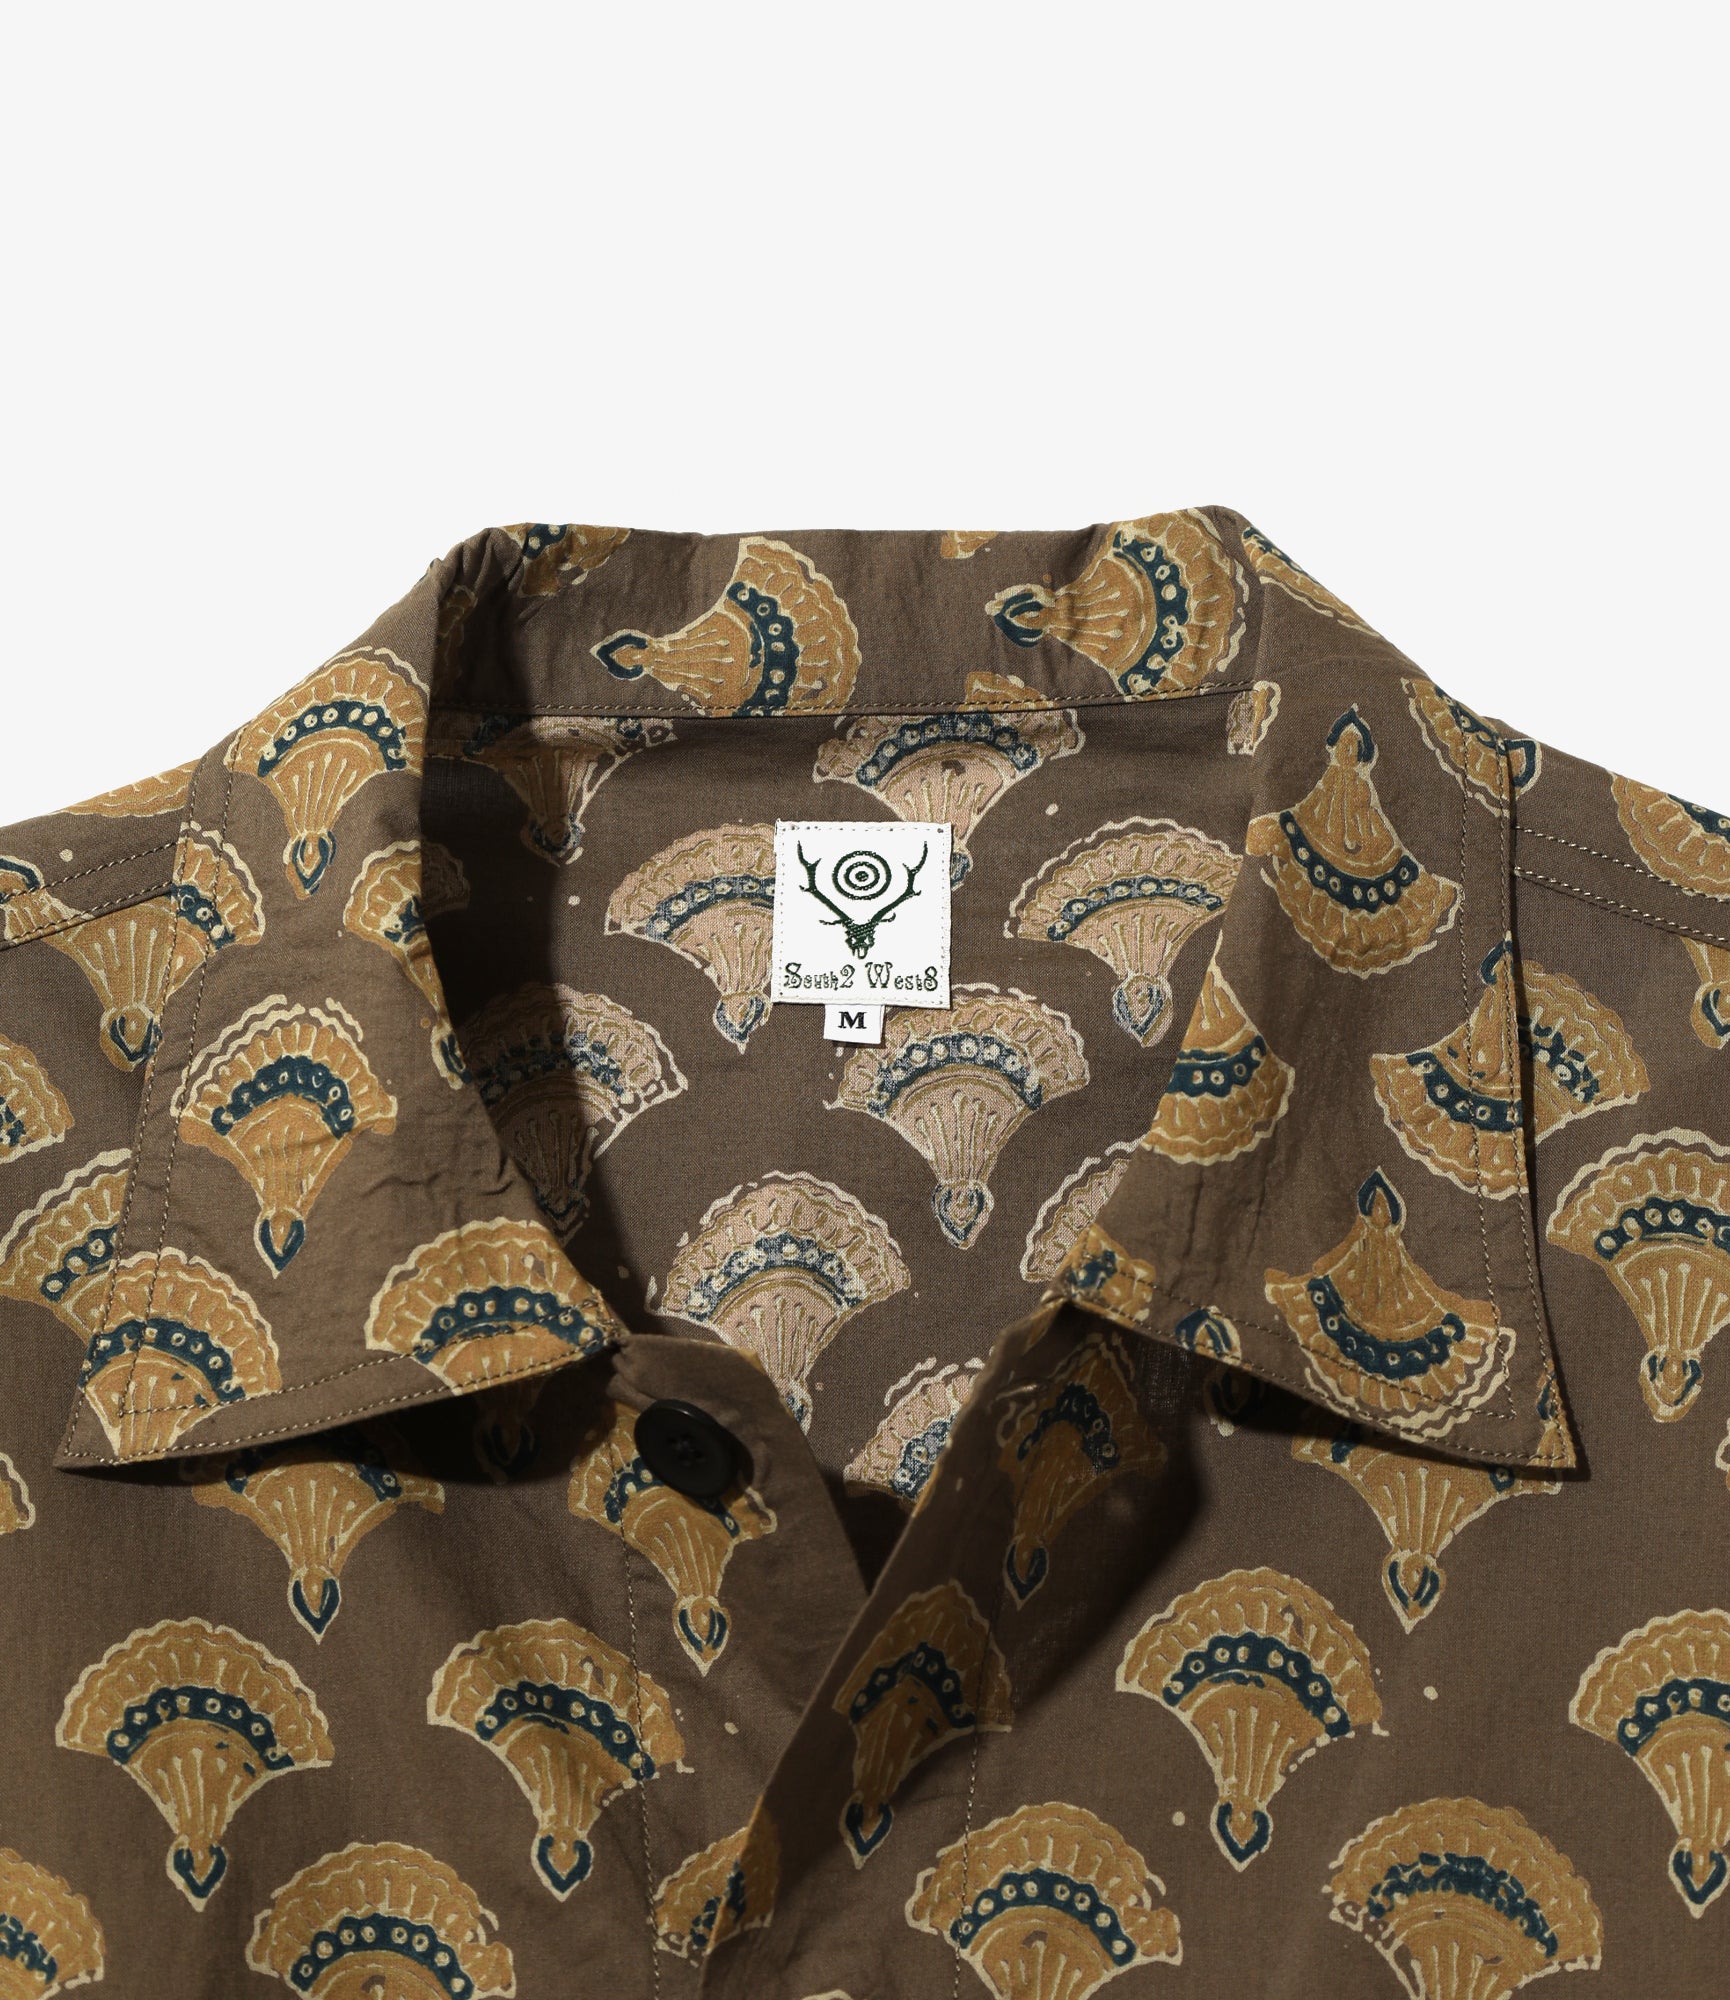 South2 West8 Smokey Shirt - Cotton Cloth / Batik Printed - Taupe